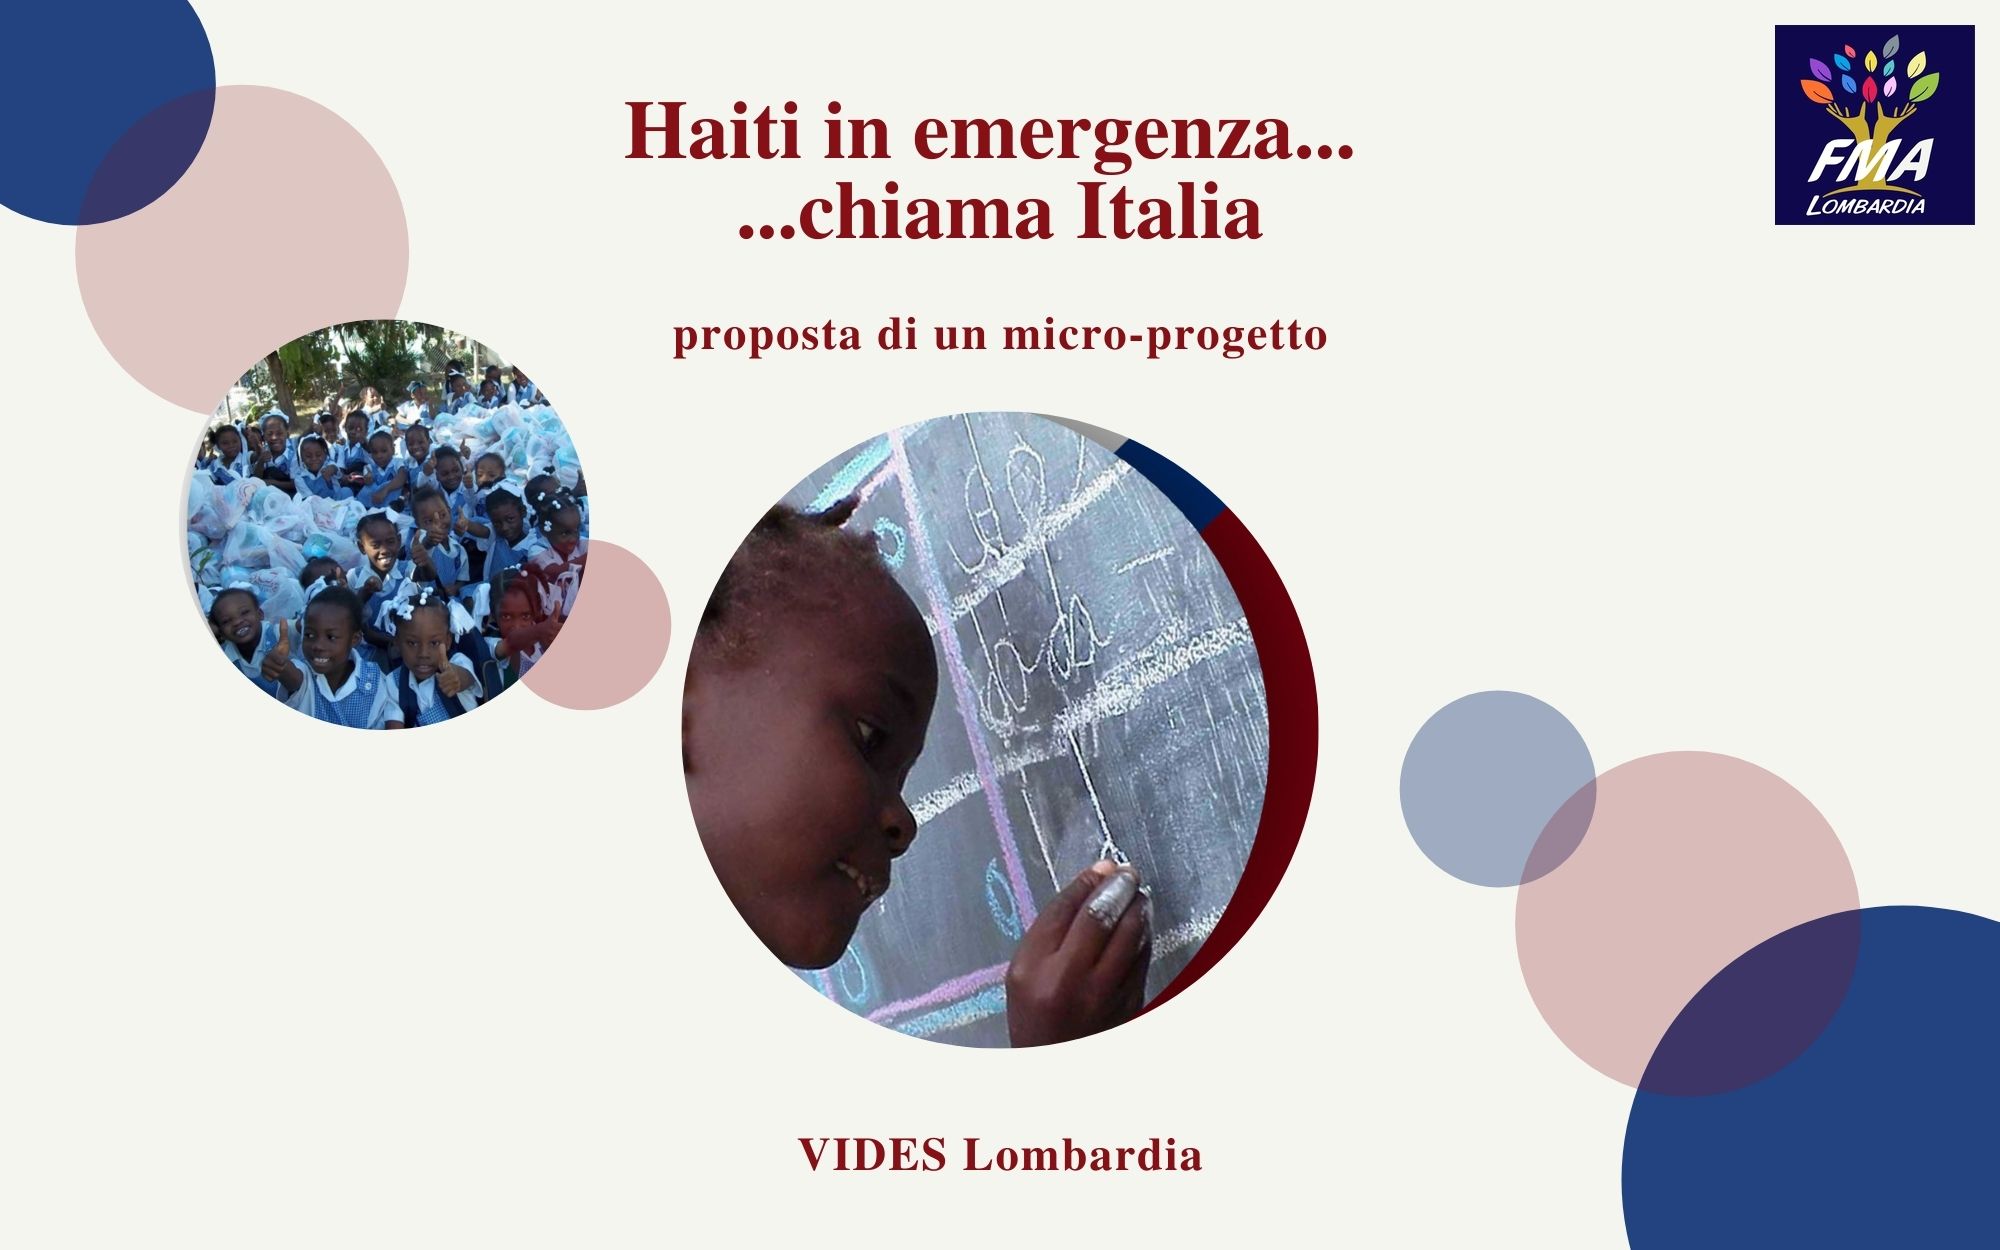 Haiti in emergenza… chiama Italia